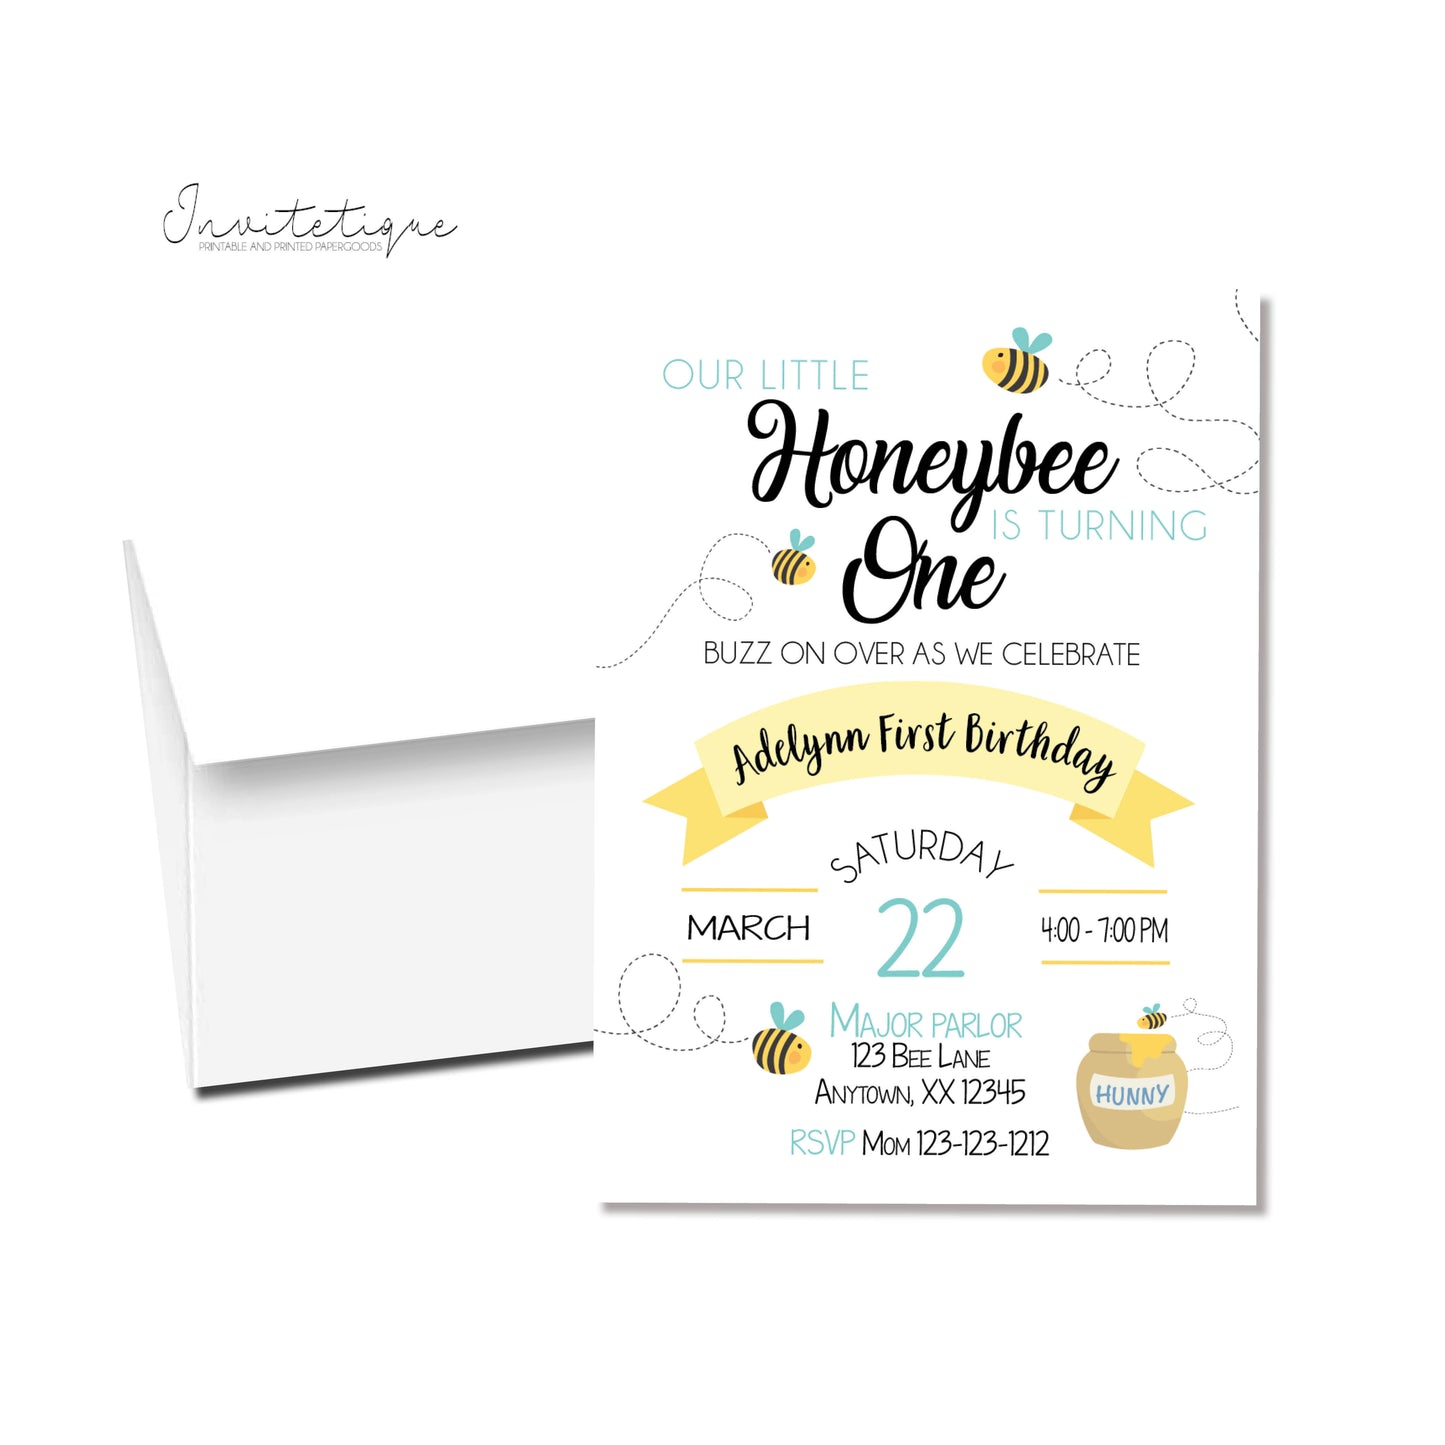 Honeybee birthday invitation